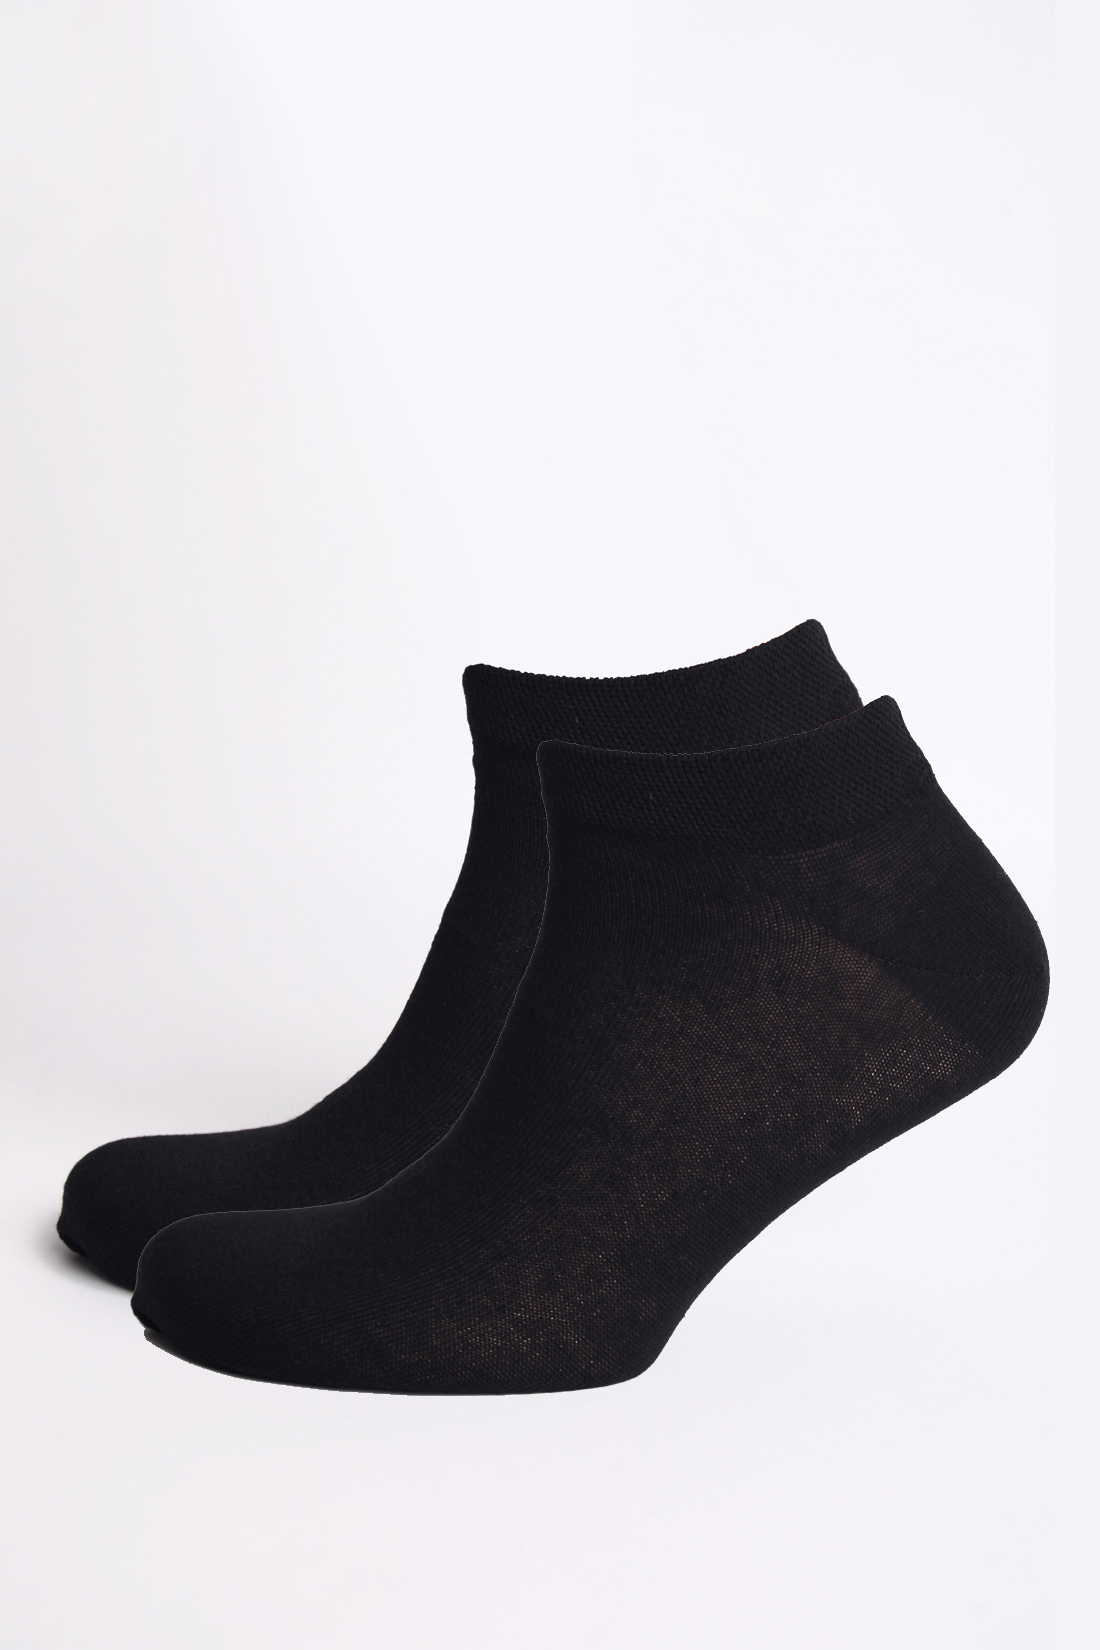 Мужские носки, 2 пары (арт. baon B891103), размер 43/45, цвет черный